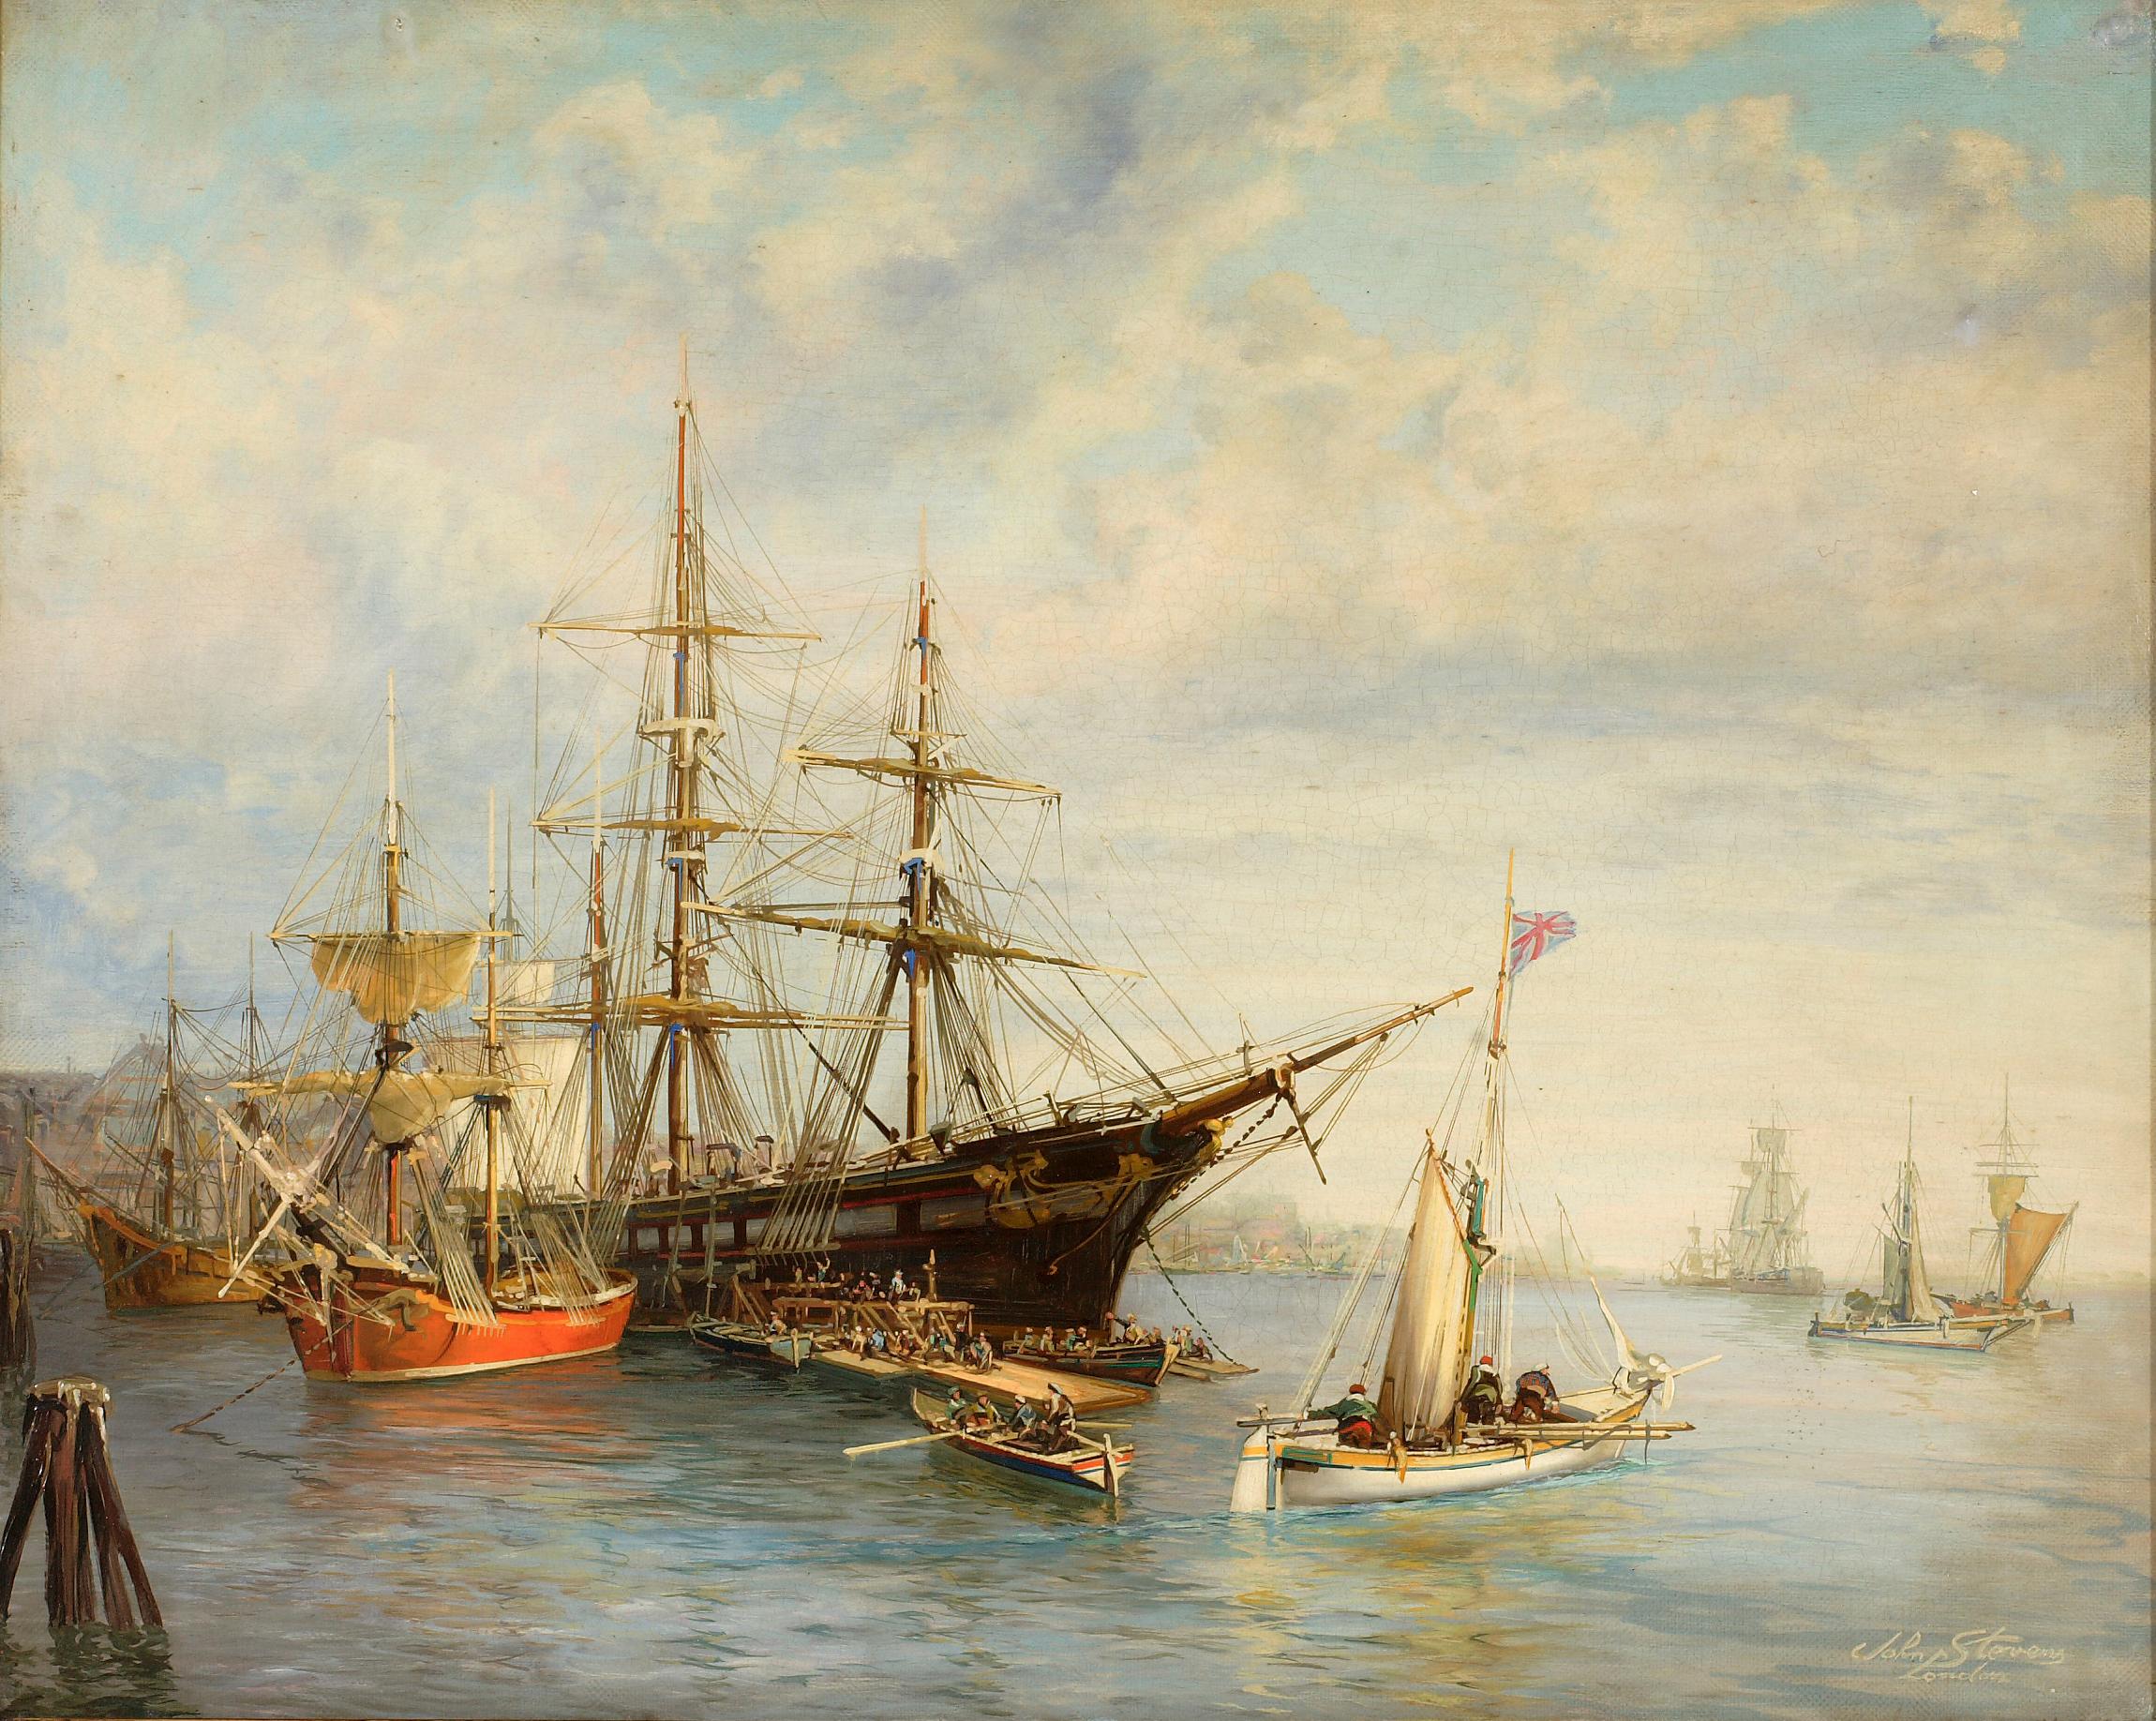 SEAPORT - Italian sailing boat oil on canvas painting by John Stevens 1